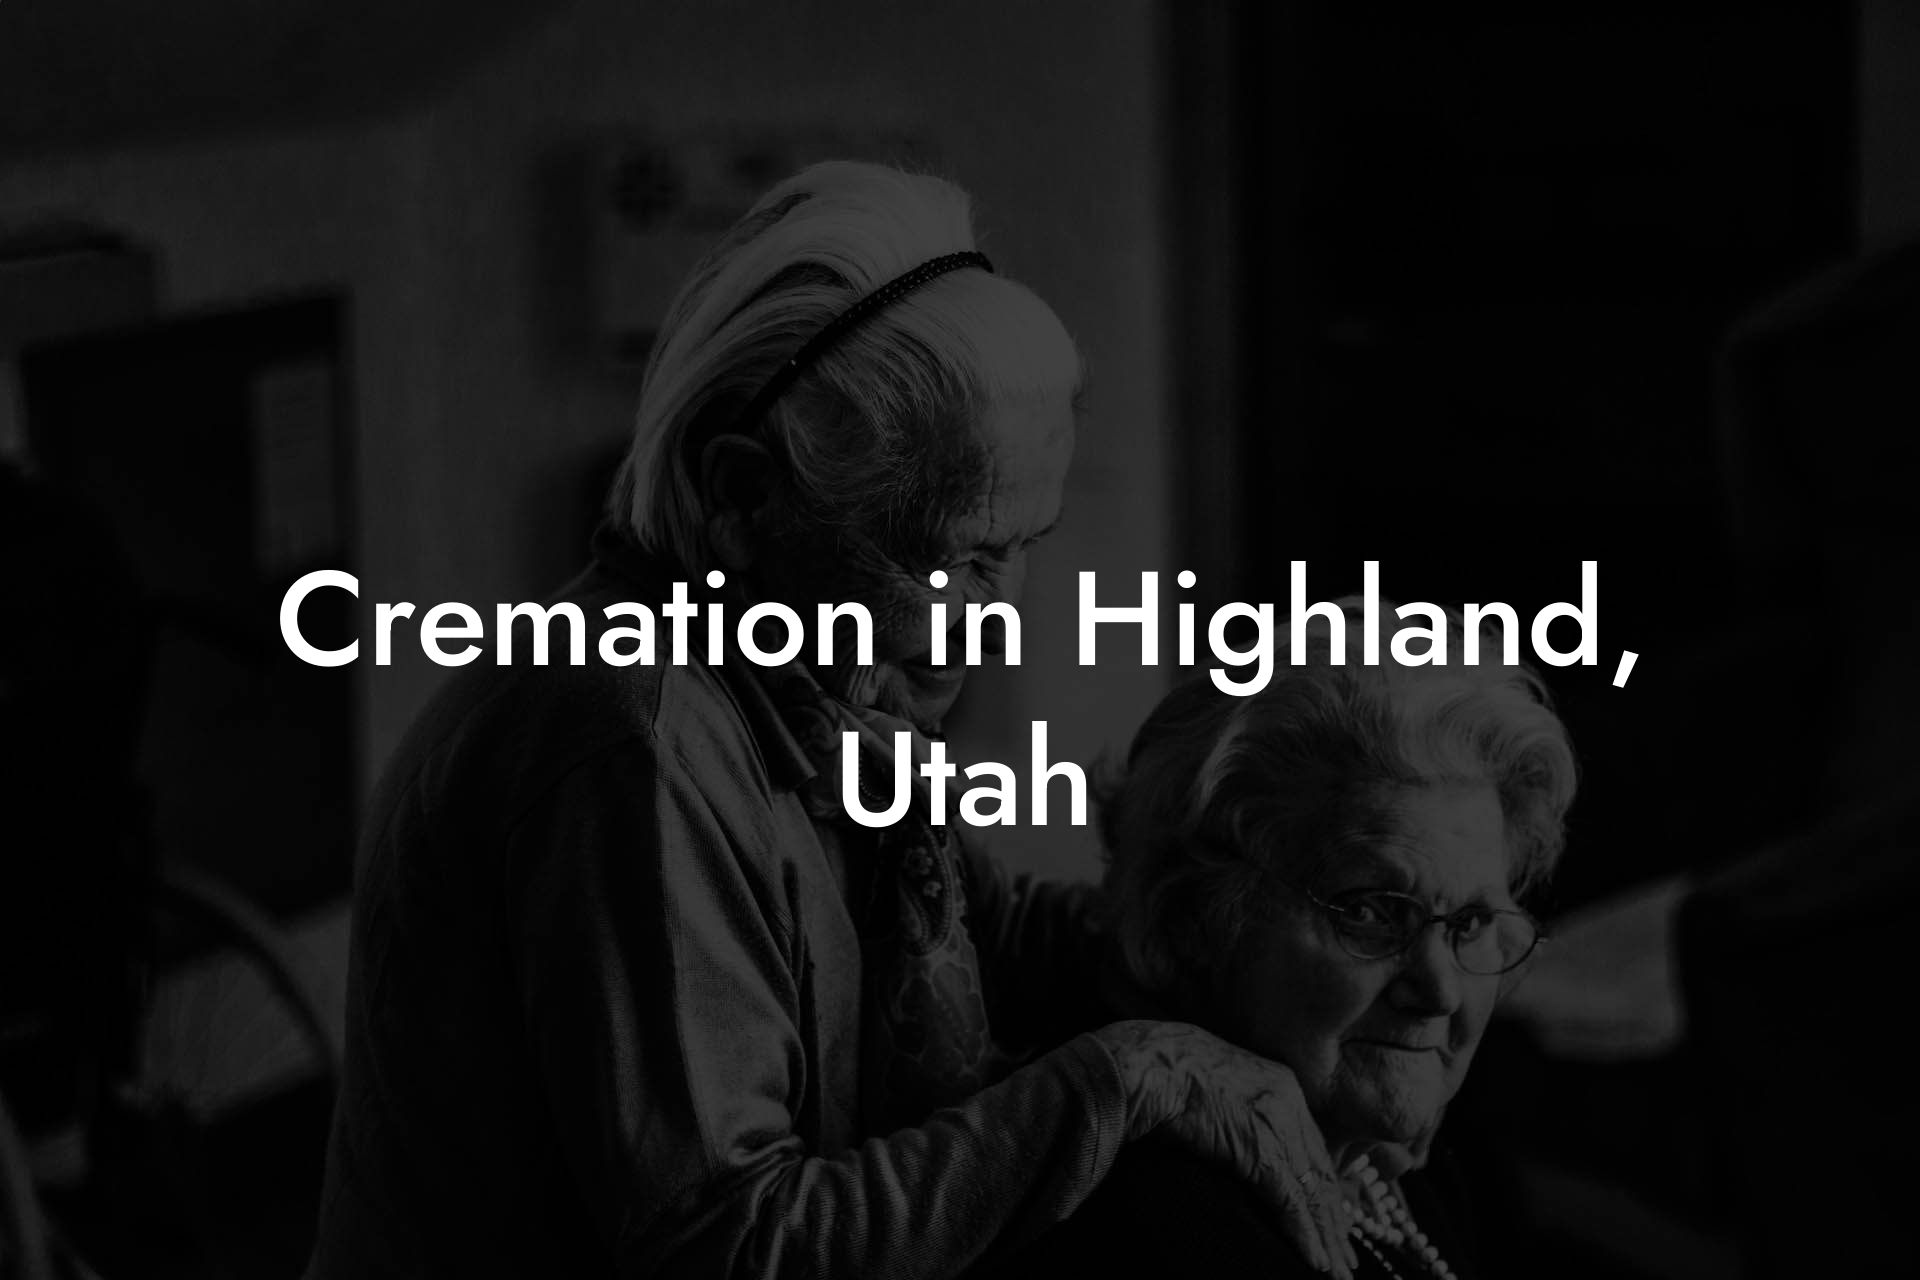 Cremation in Highland, Utah